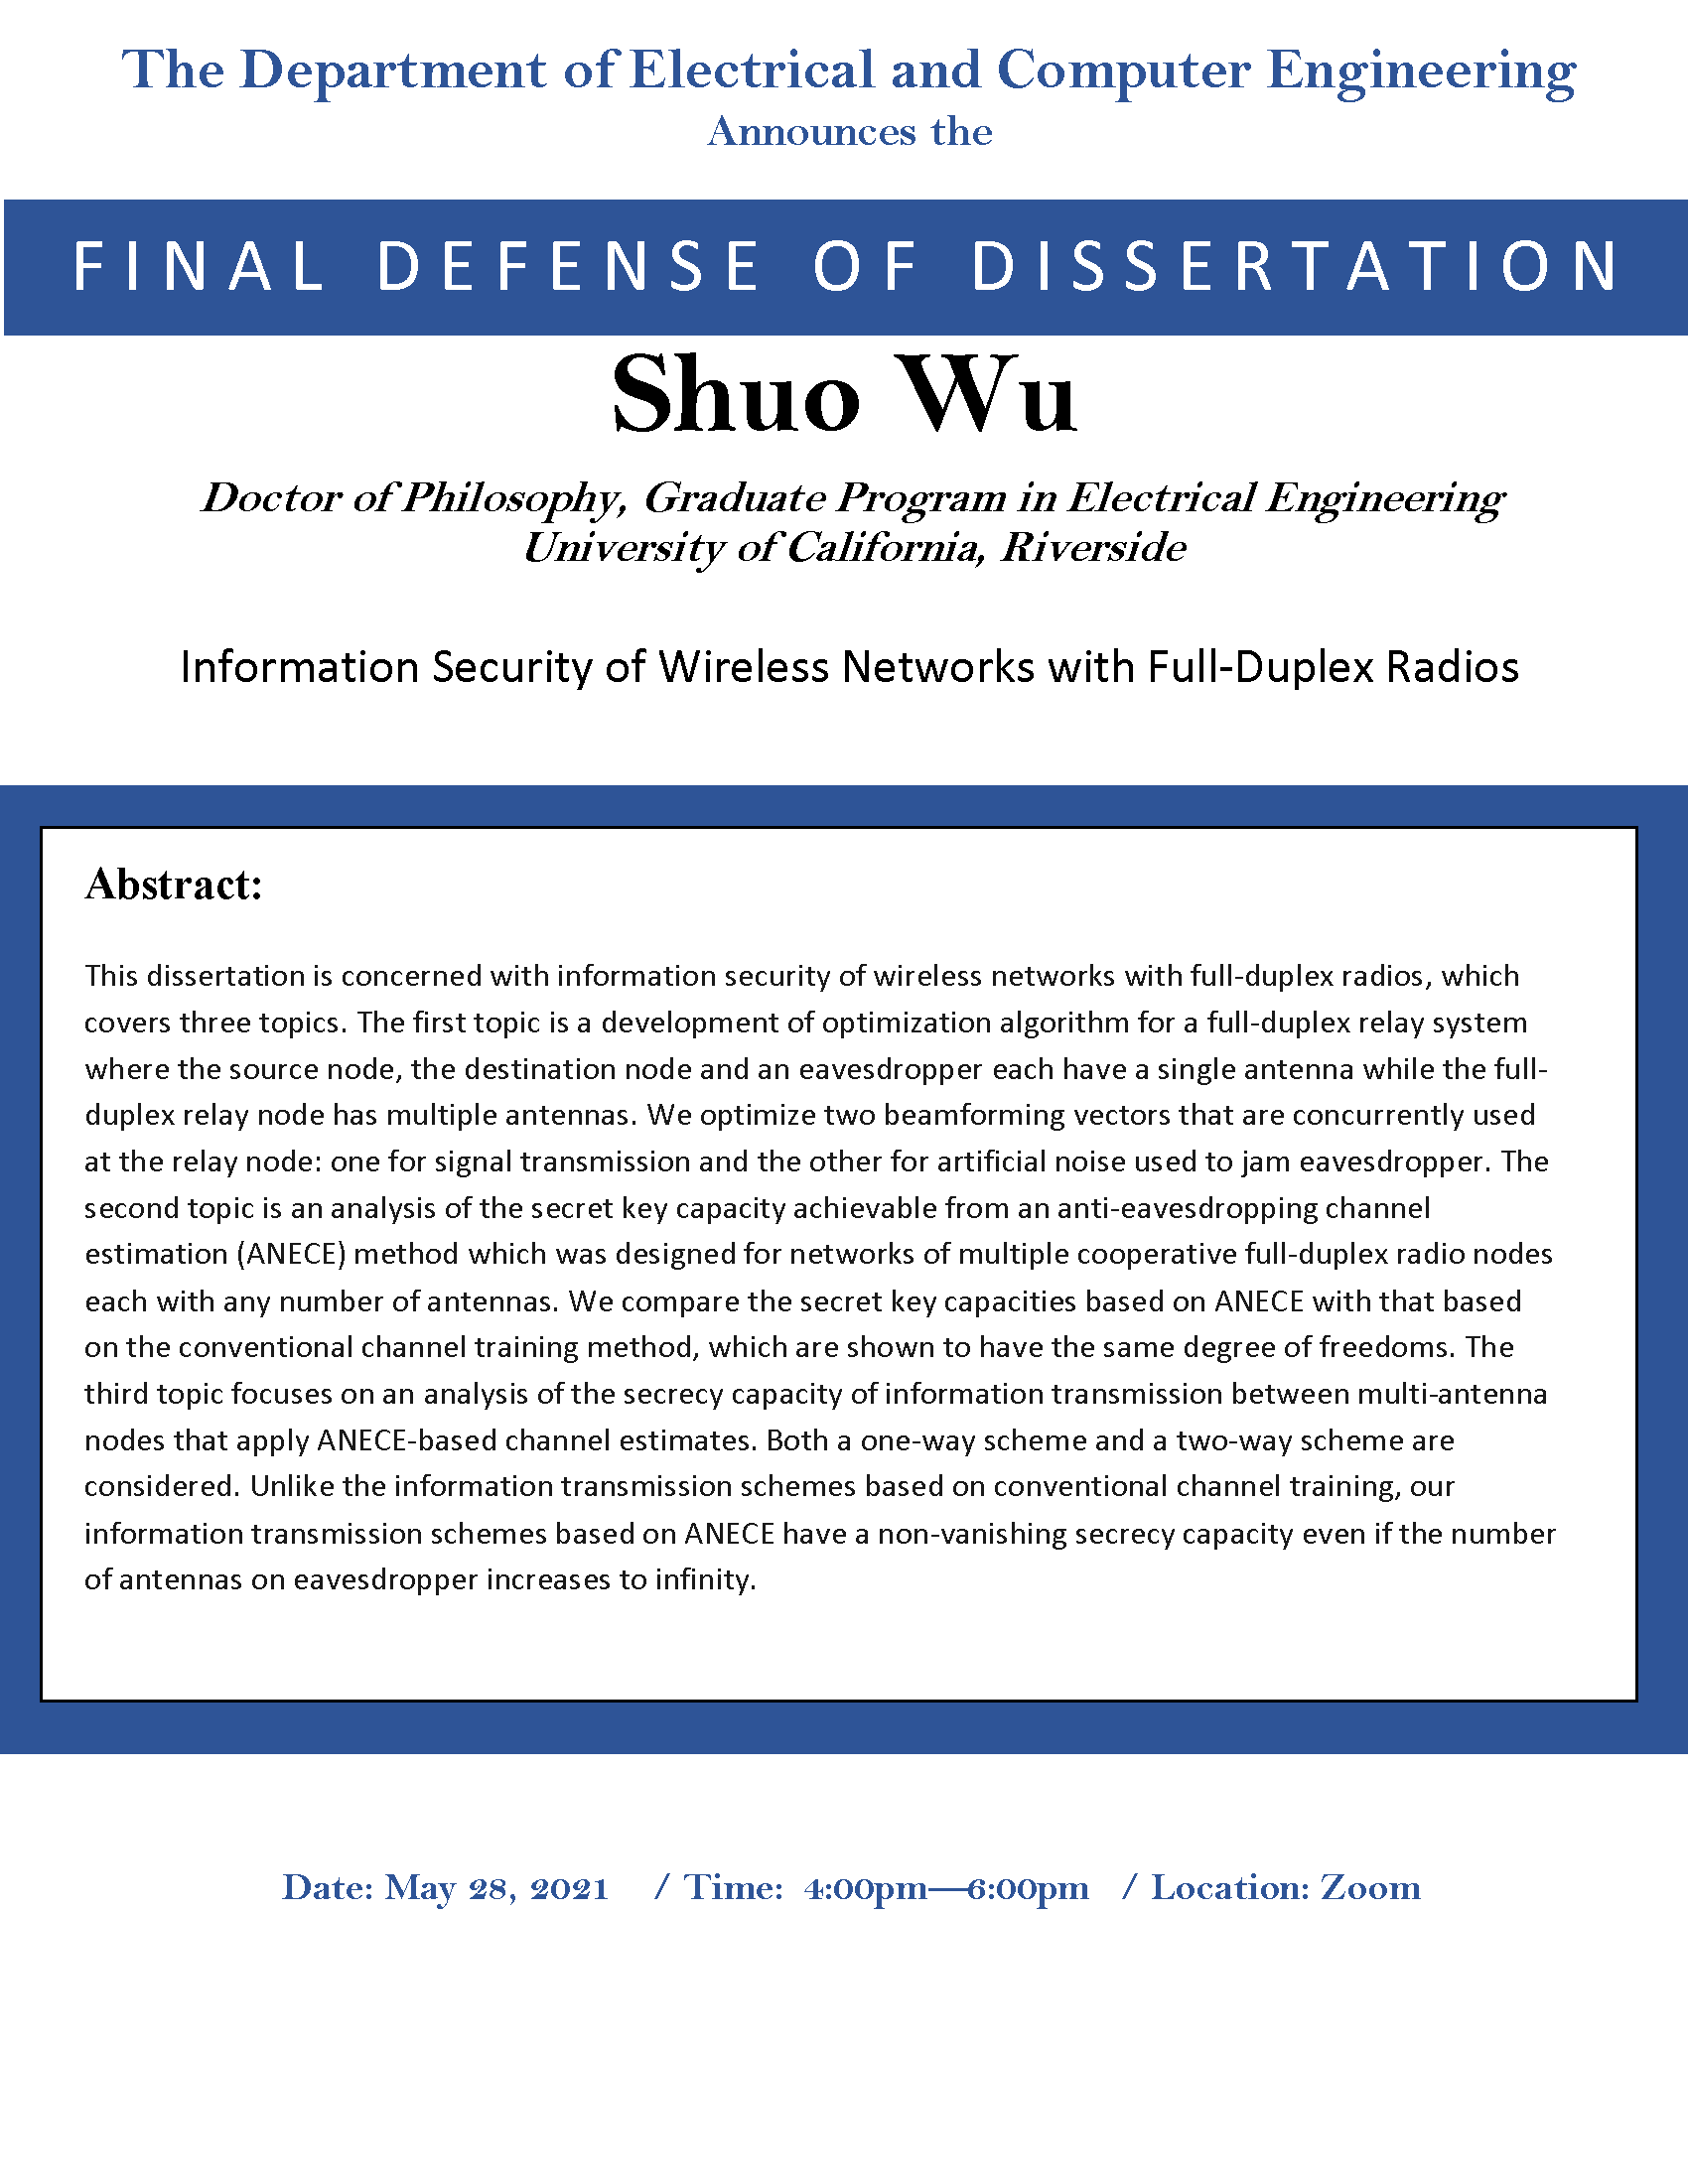 Final Defense of Dissertation: Shuo Wu 